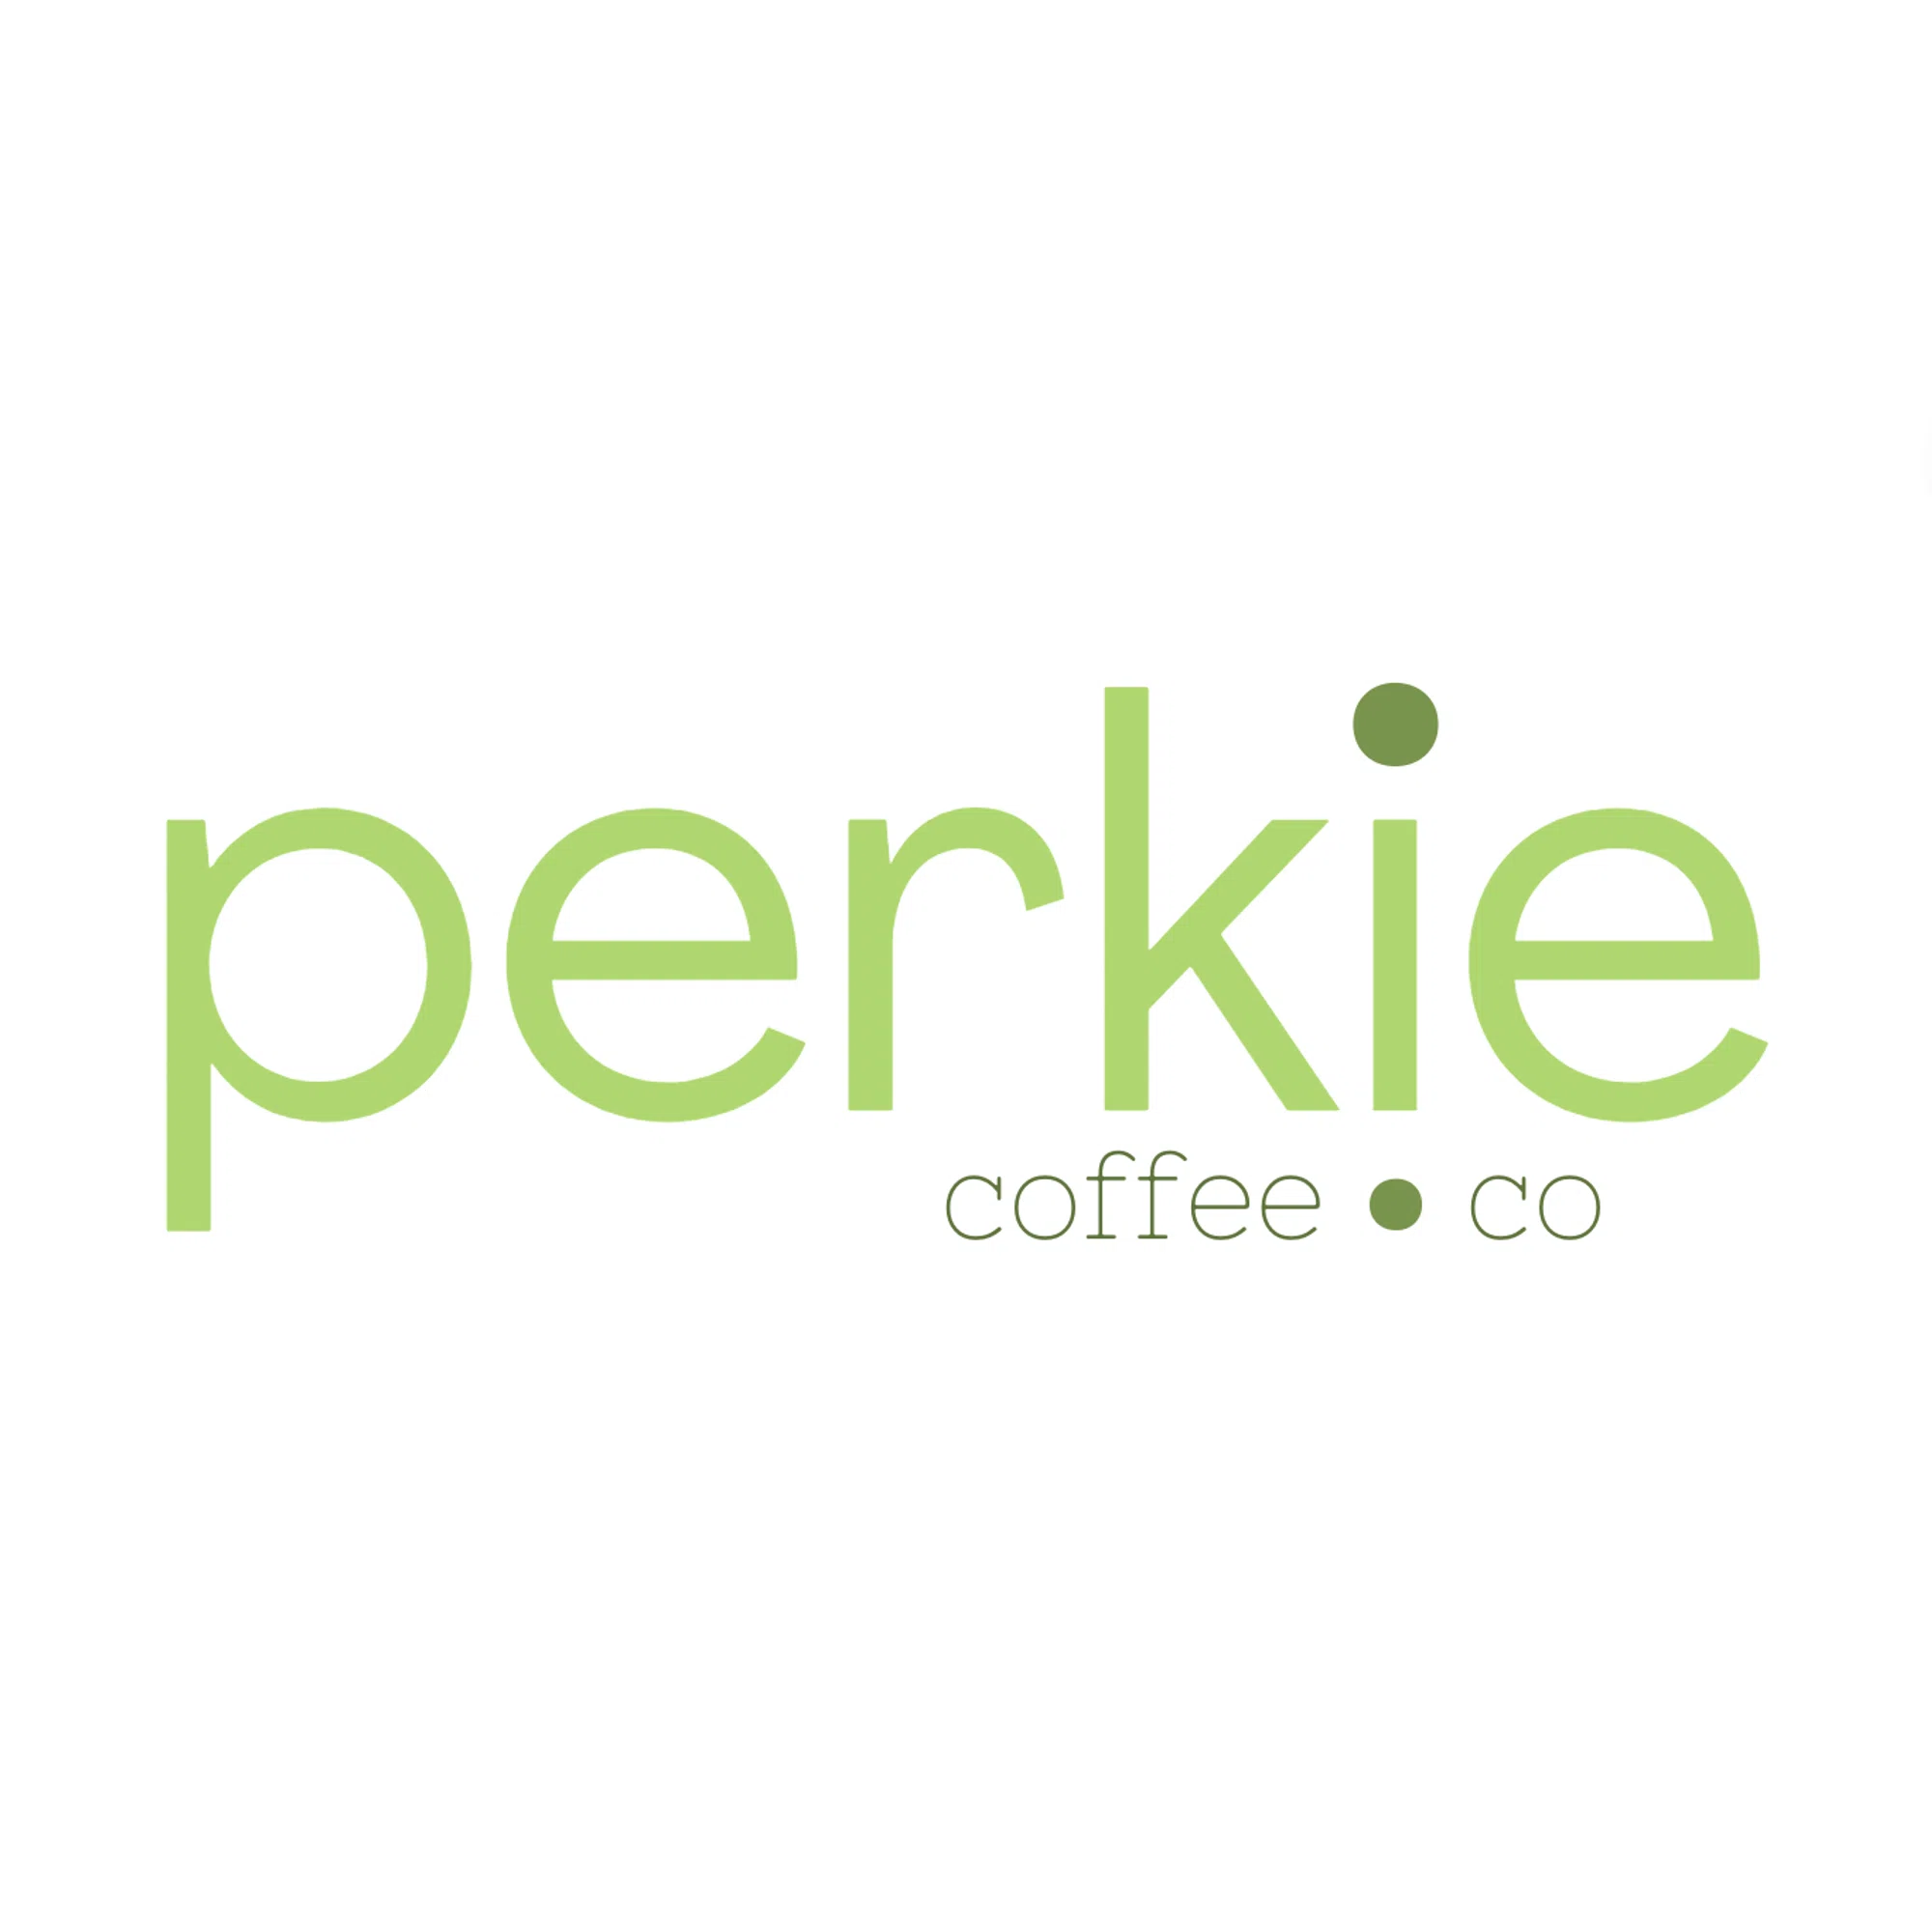 Perkie Coffee